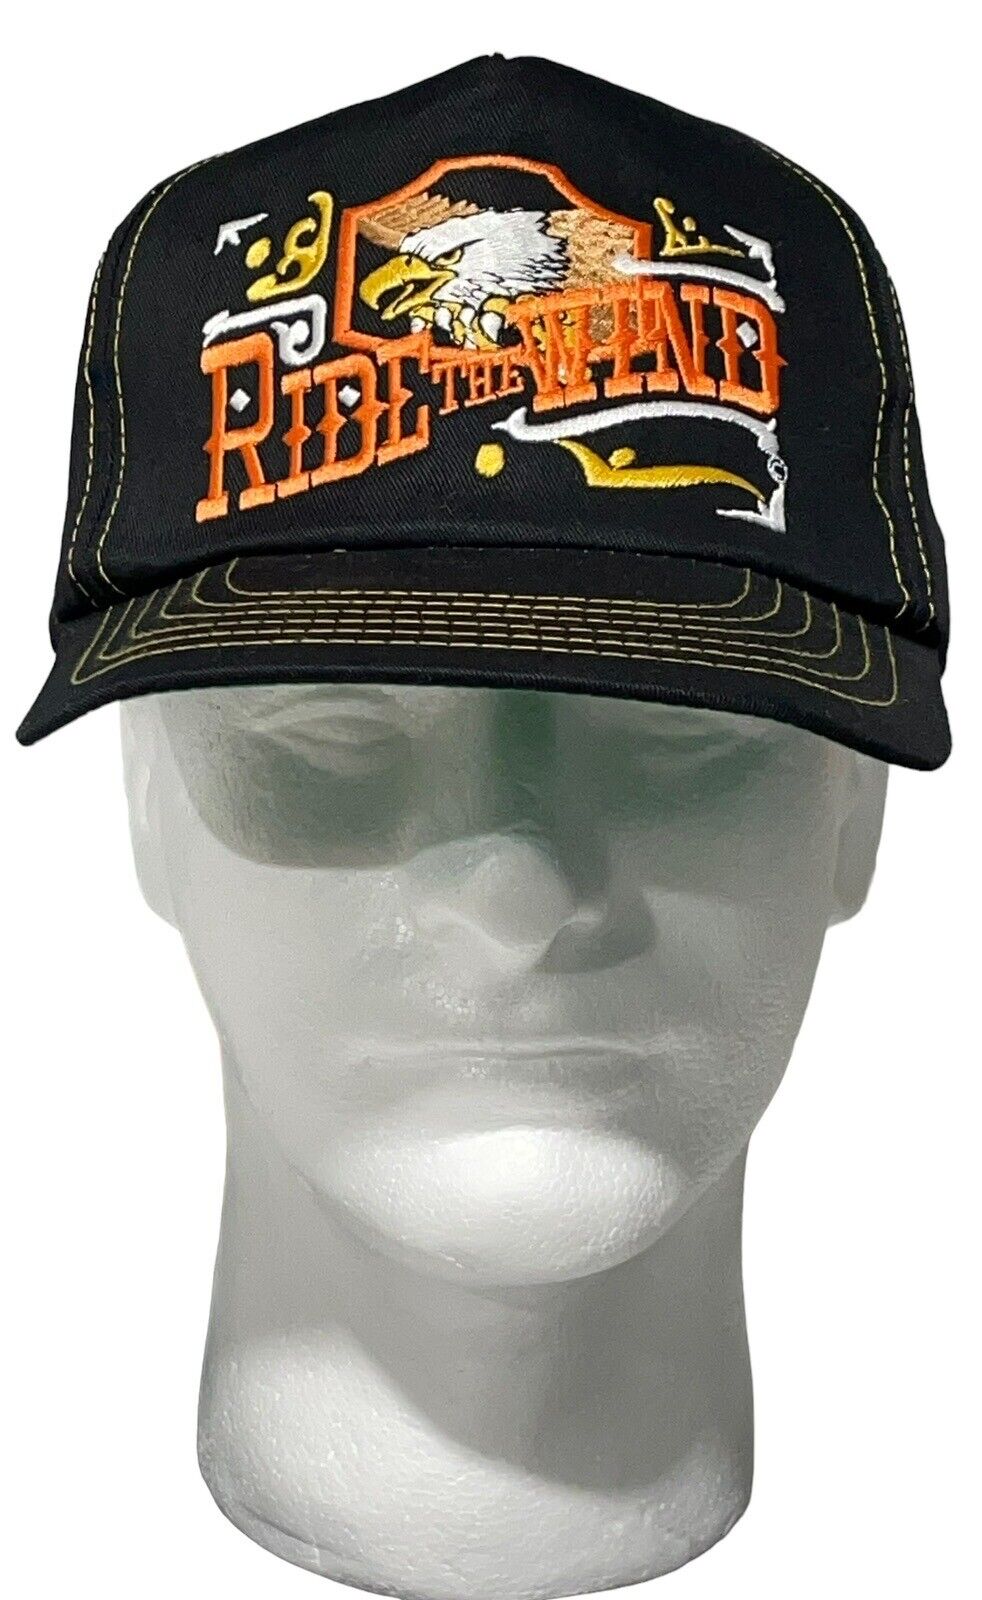 Vintage “Ride The Wind” Motorcycle Trucker Hat Adjustable Black 90’s